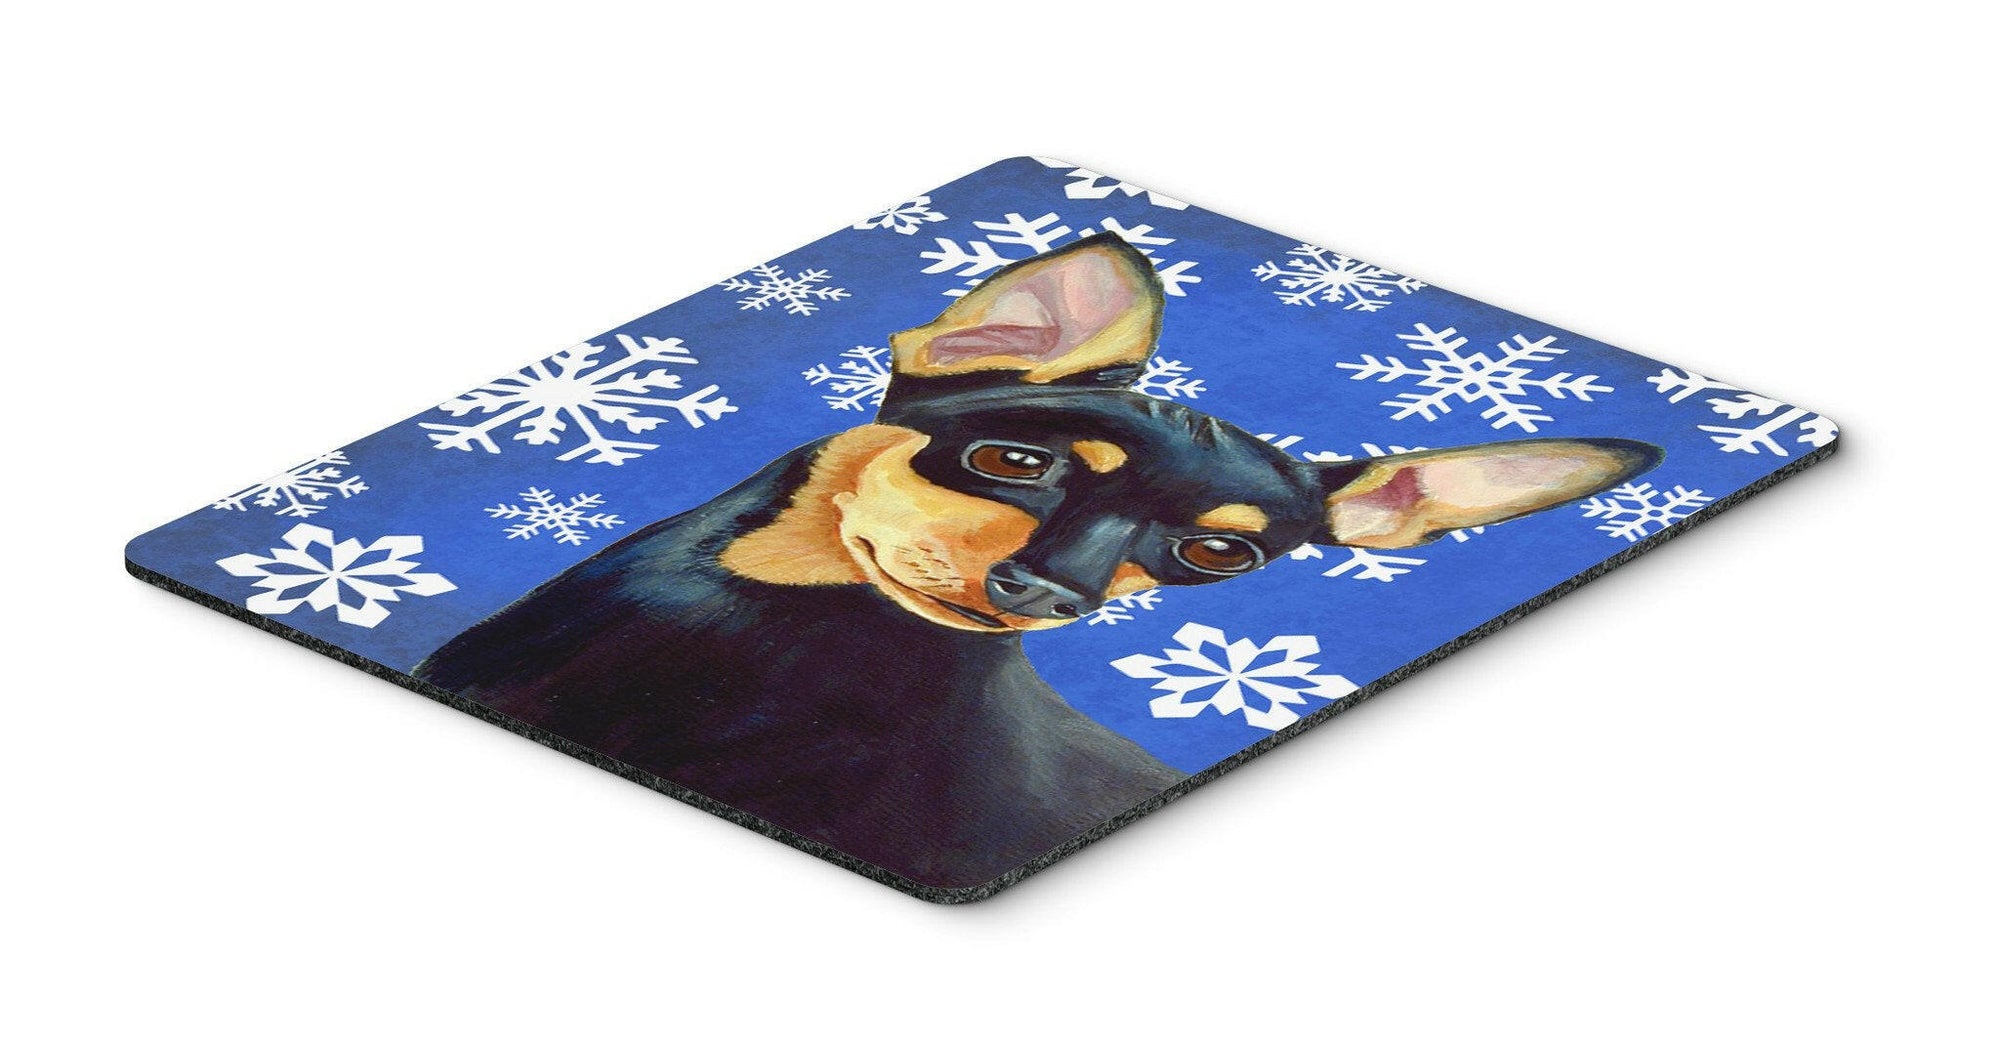 Min Pin Winter Snowflakes Holiday Mouse Pad, Hot Pad or Trivet by Caroline's Treasures